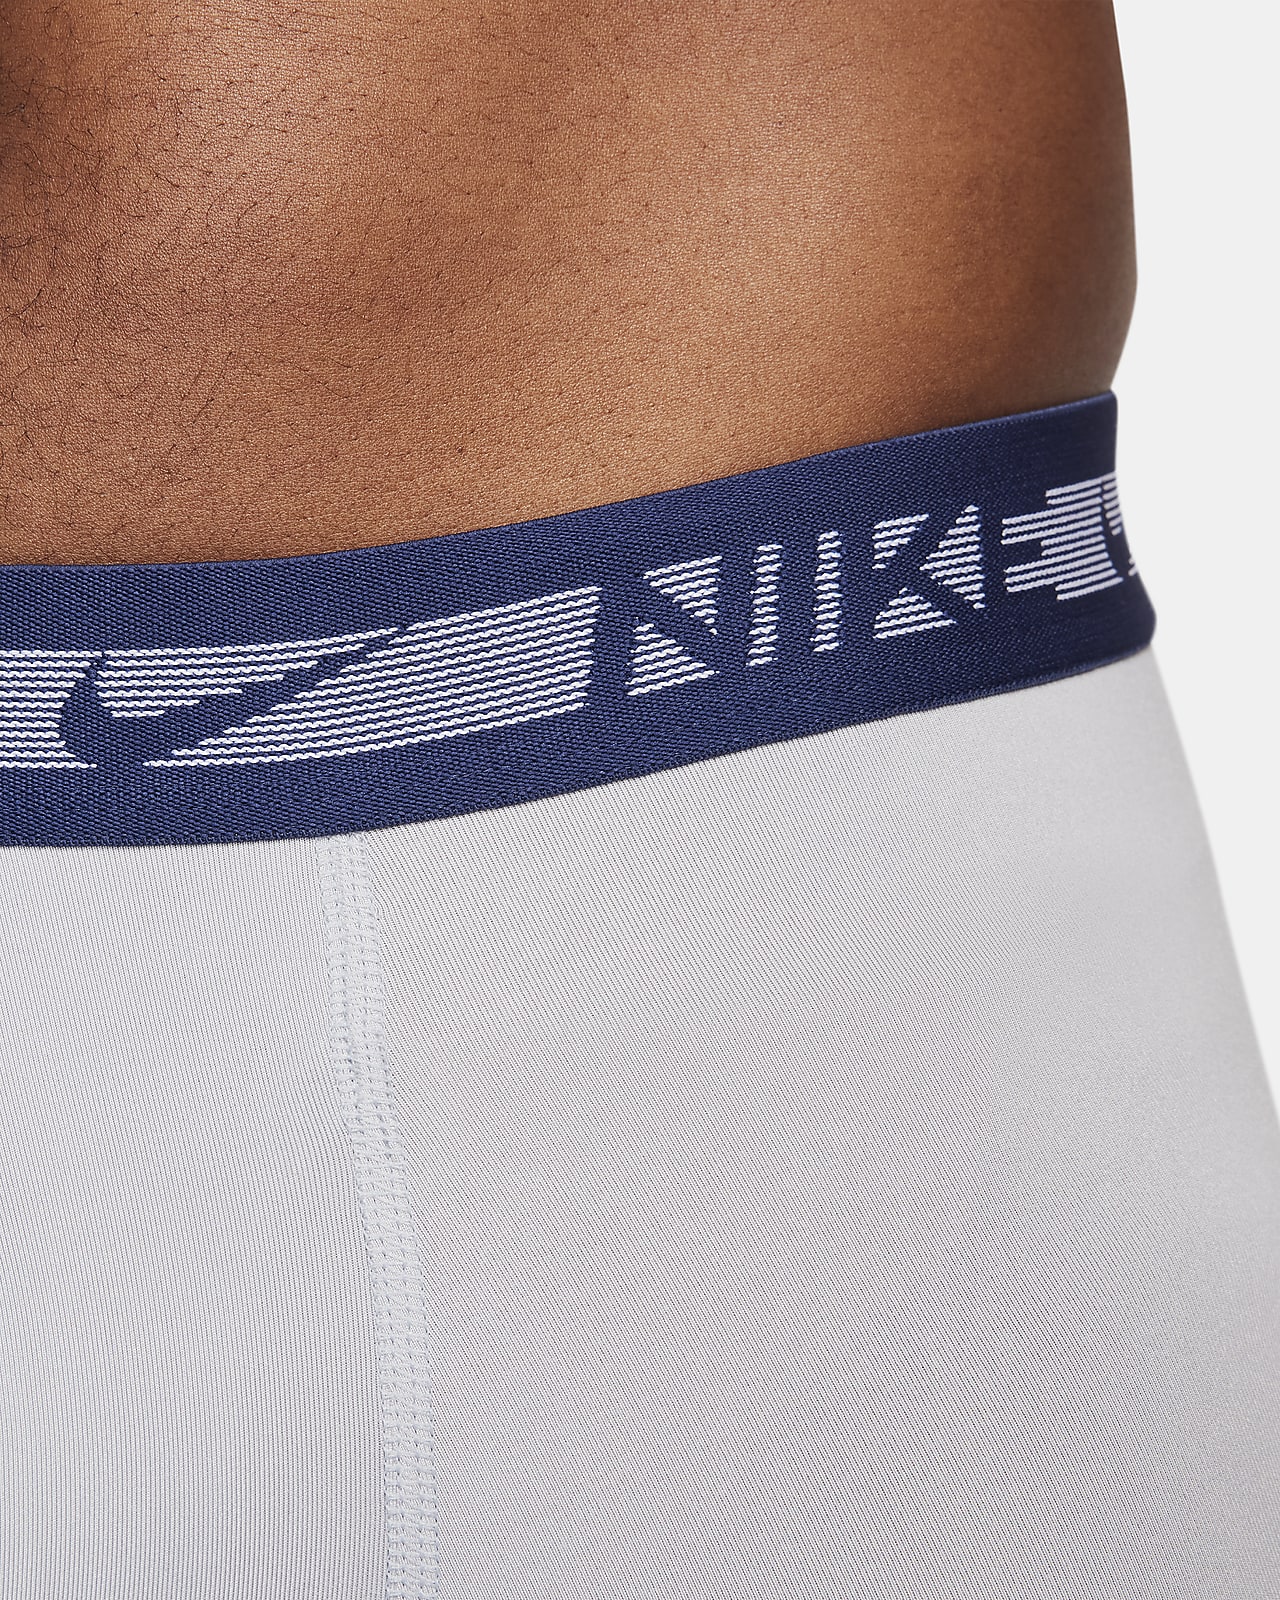 Nike Men's 3-Pack Dri-Fit Essential Micro Boxer Briefs, Black